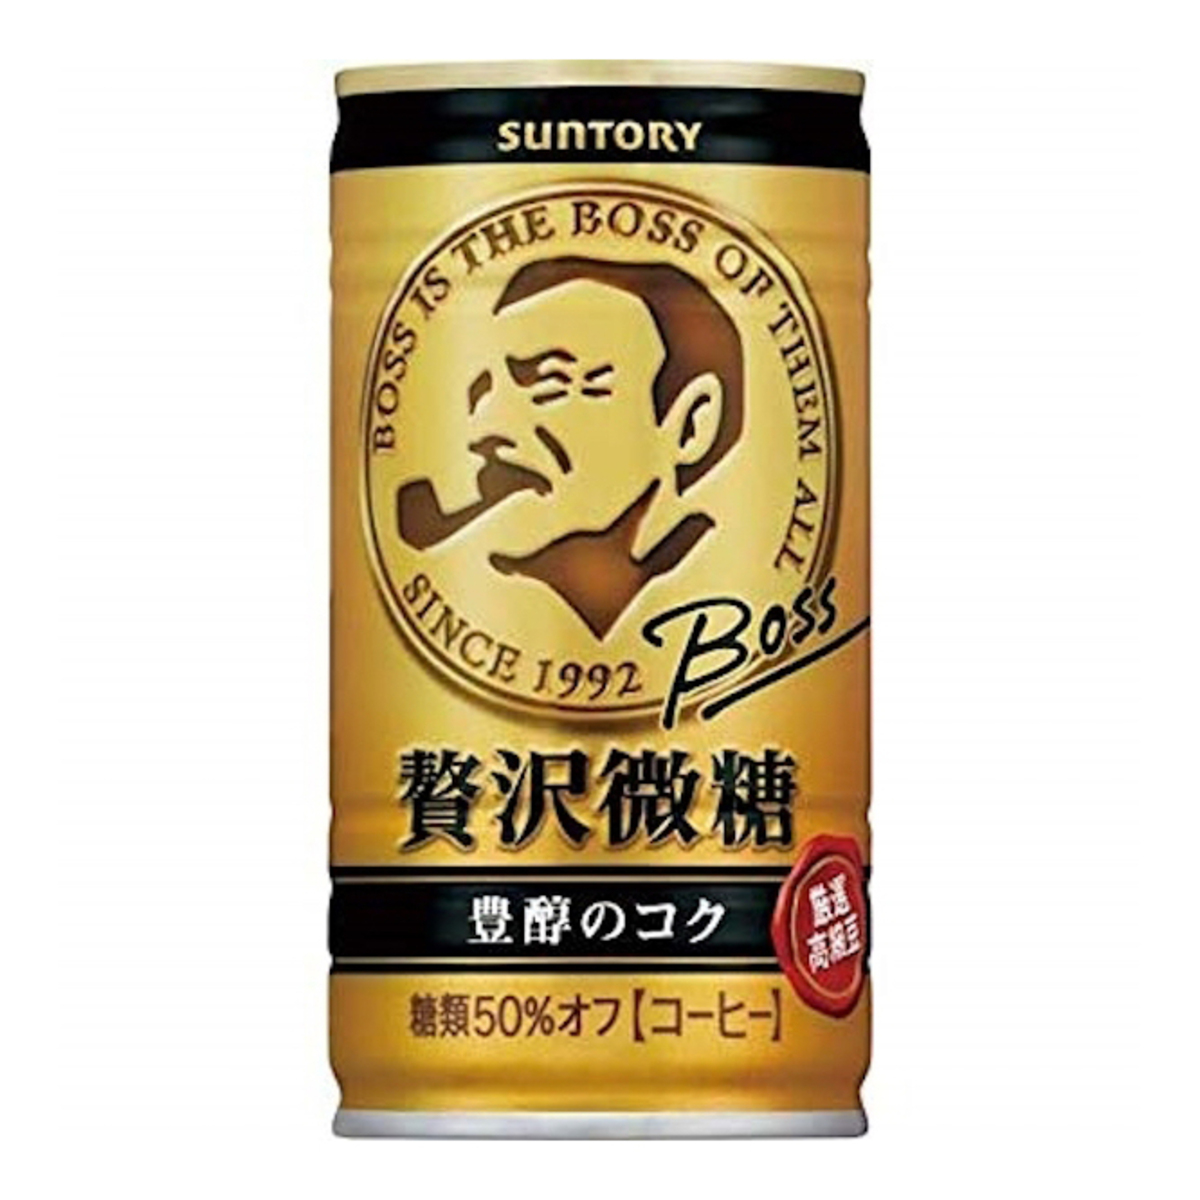 Suntory Boss Coffee 50% Sugar Less 185ml-eBest-Weekly Special,Coffee & Tea,Drinks